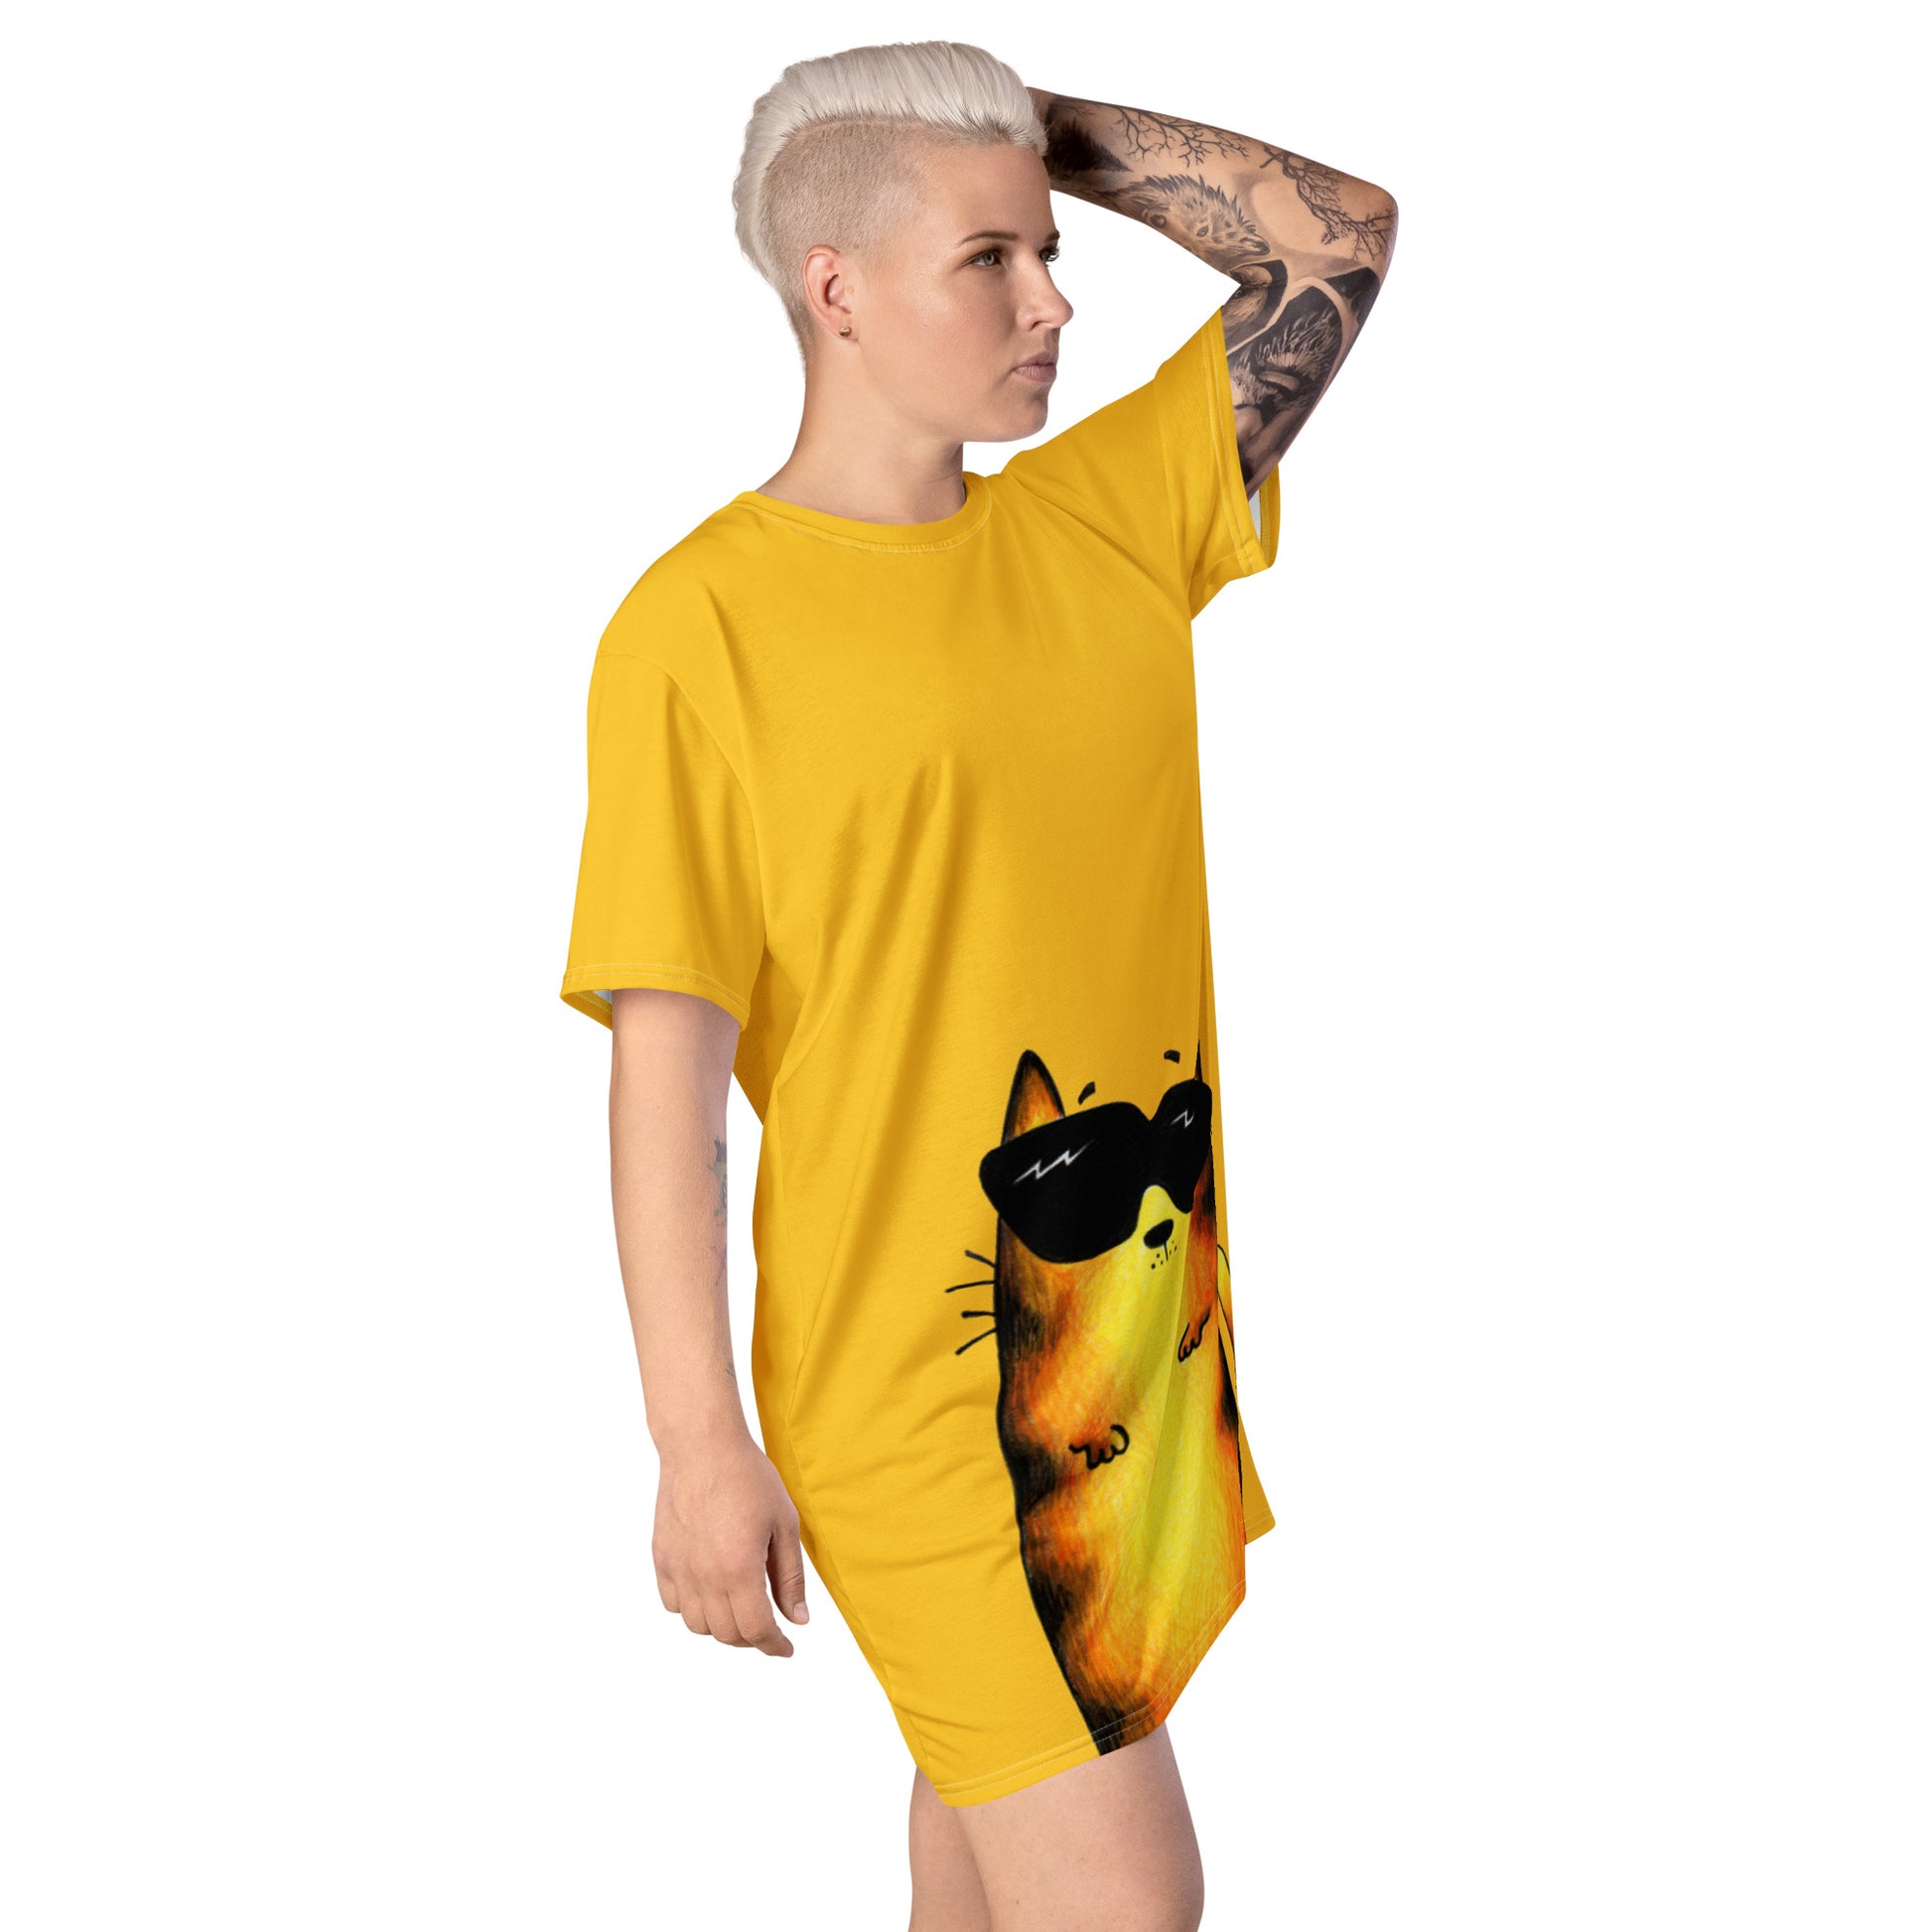 Yellow ladies T-shirt dress with cat print.